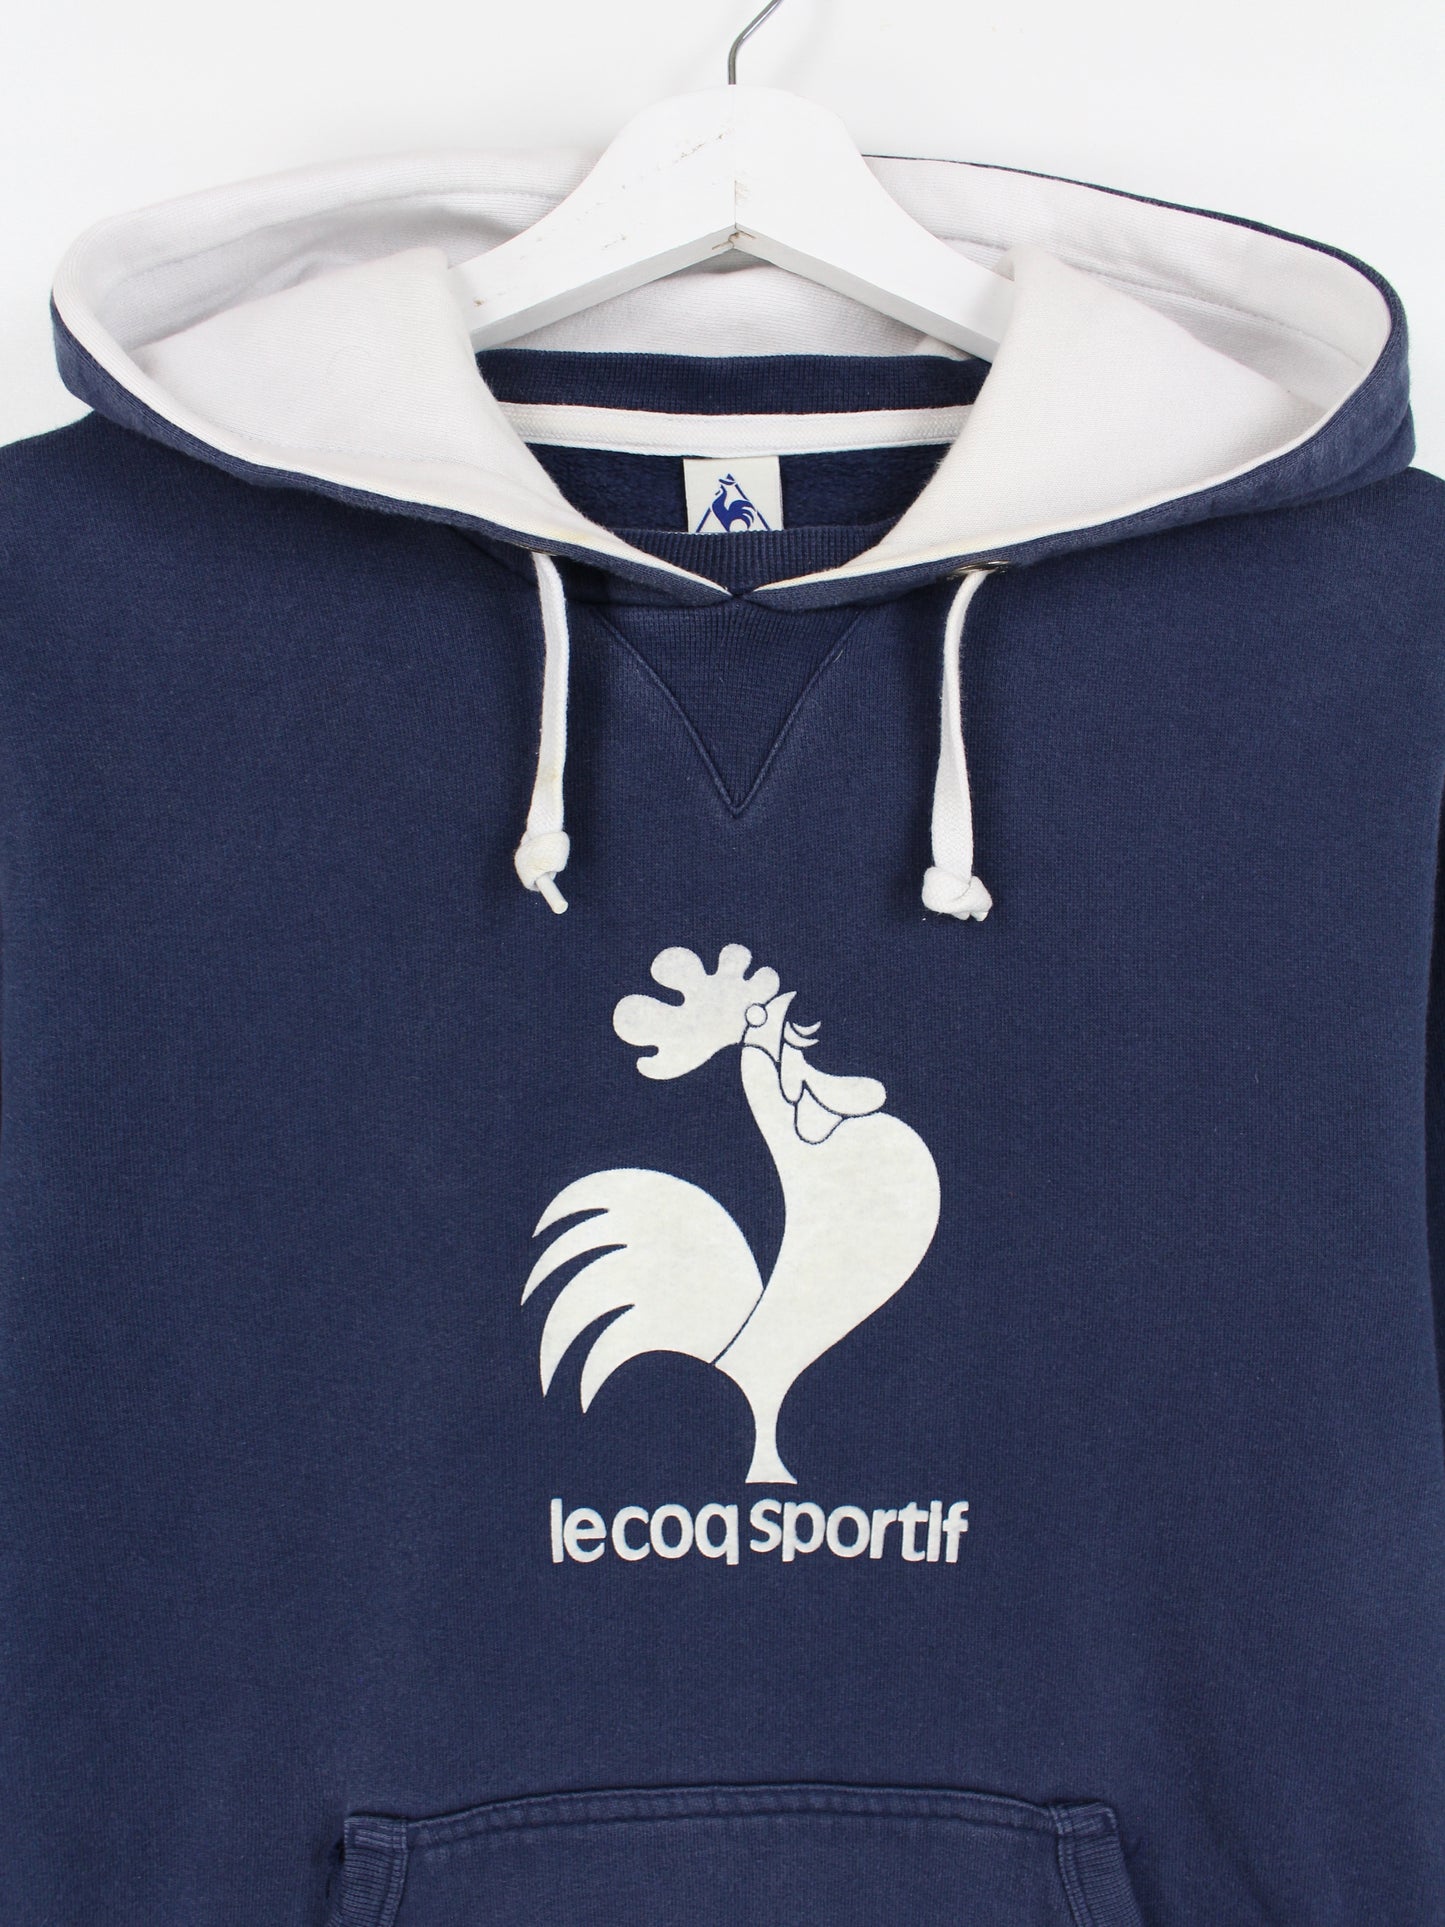 Le Coq Sportif Hoodie Blau S